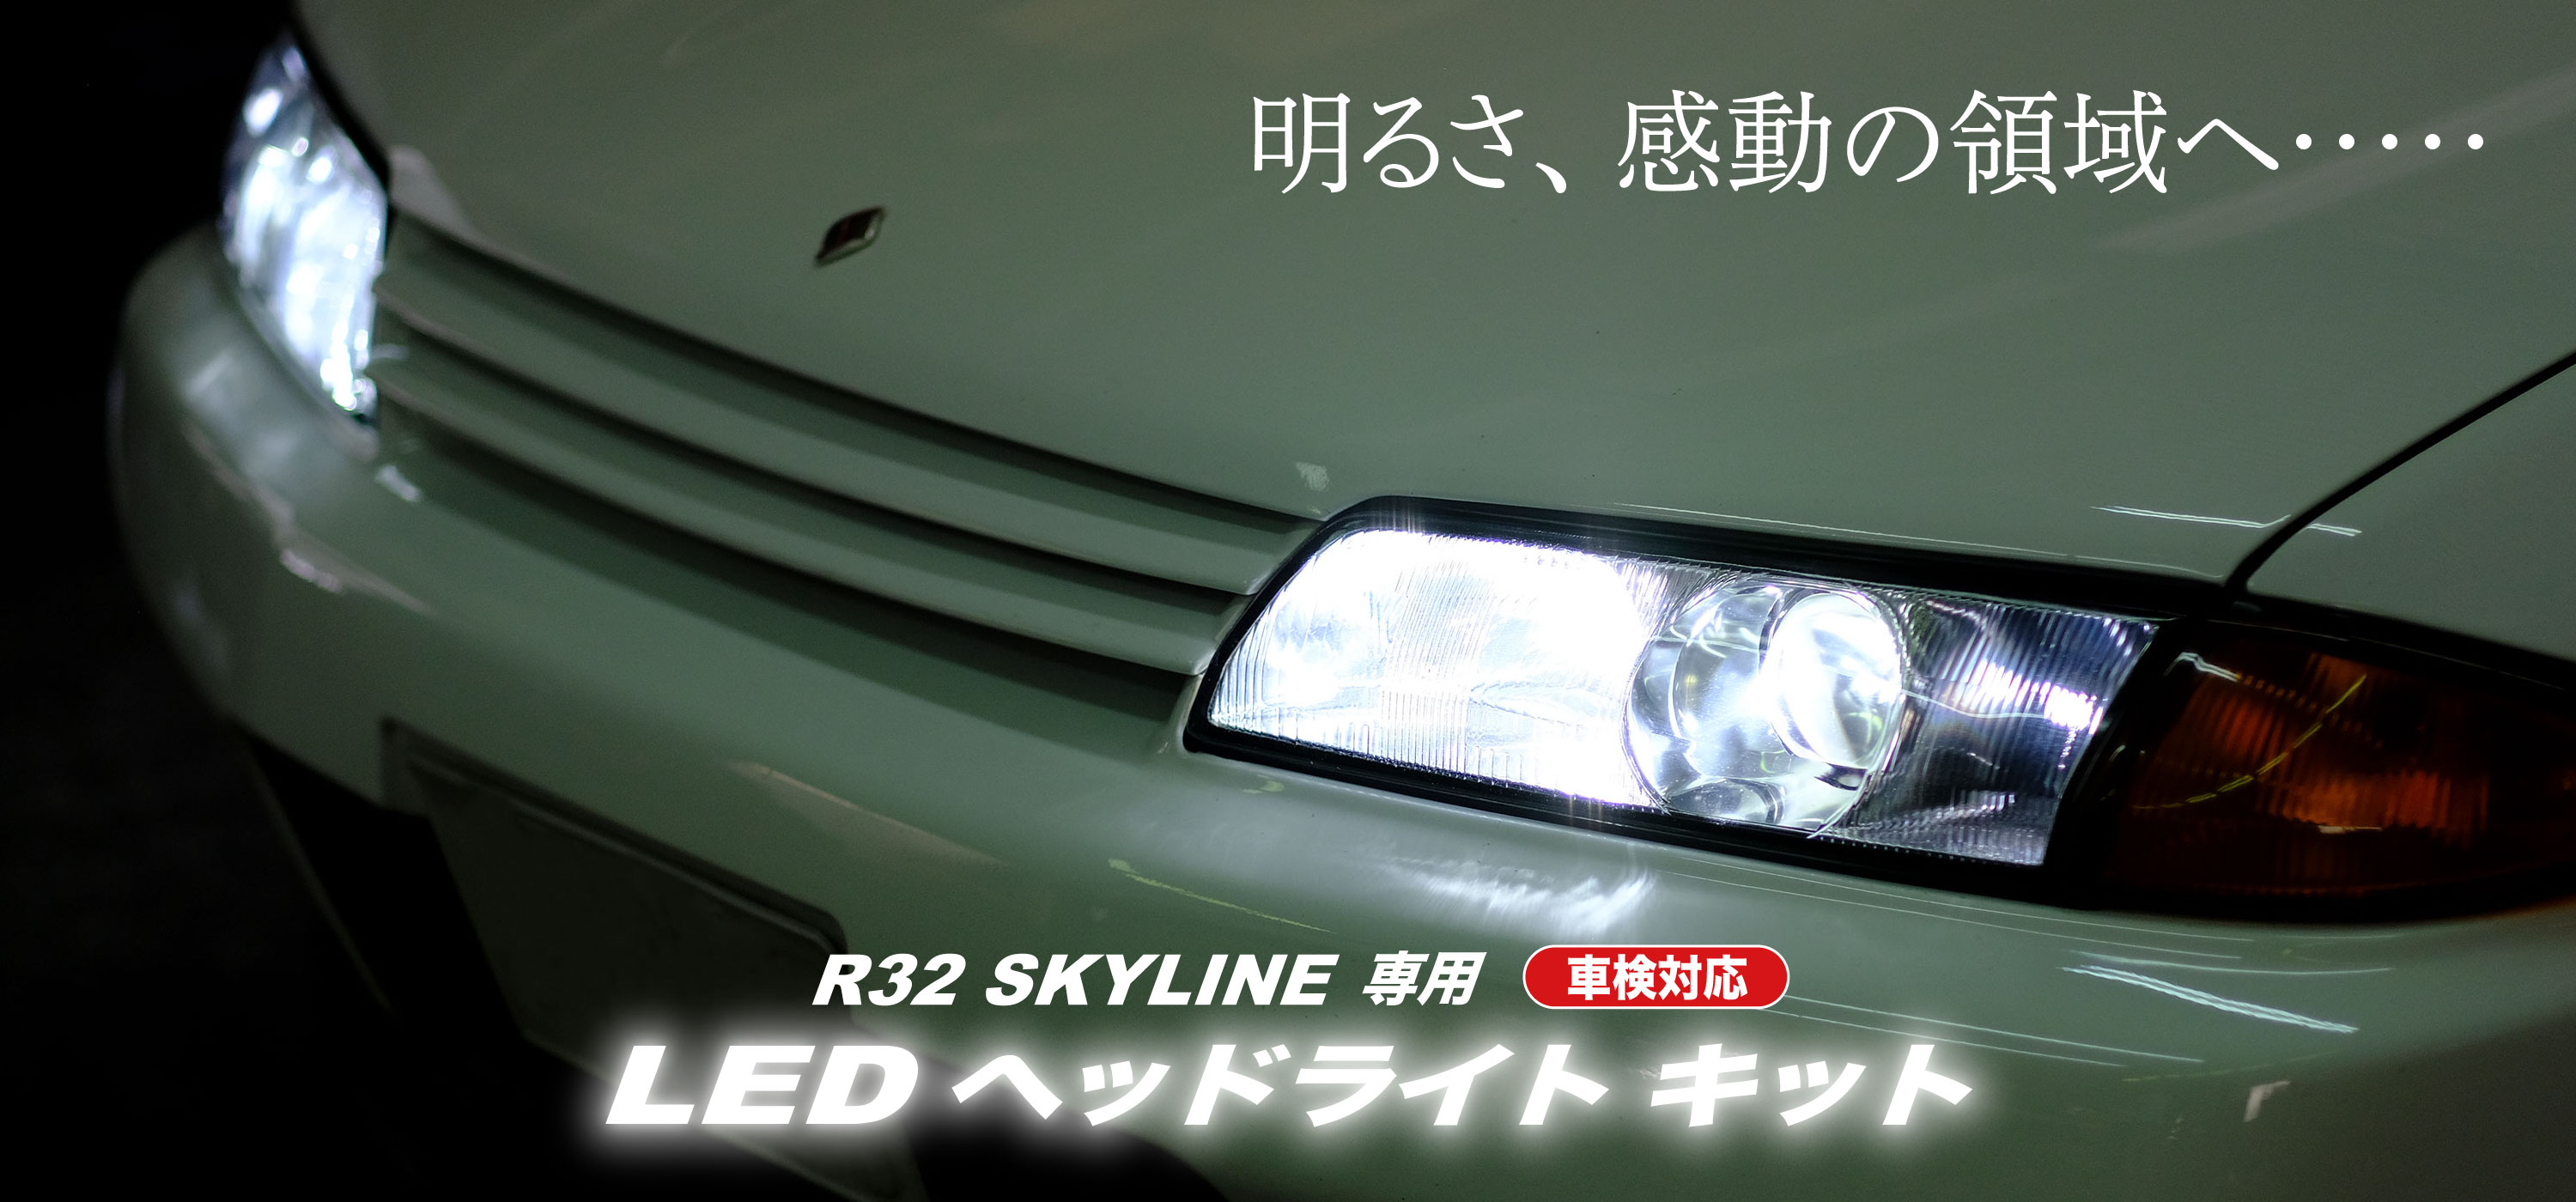 R32 LED Headlight